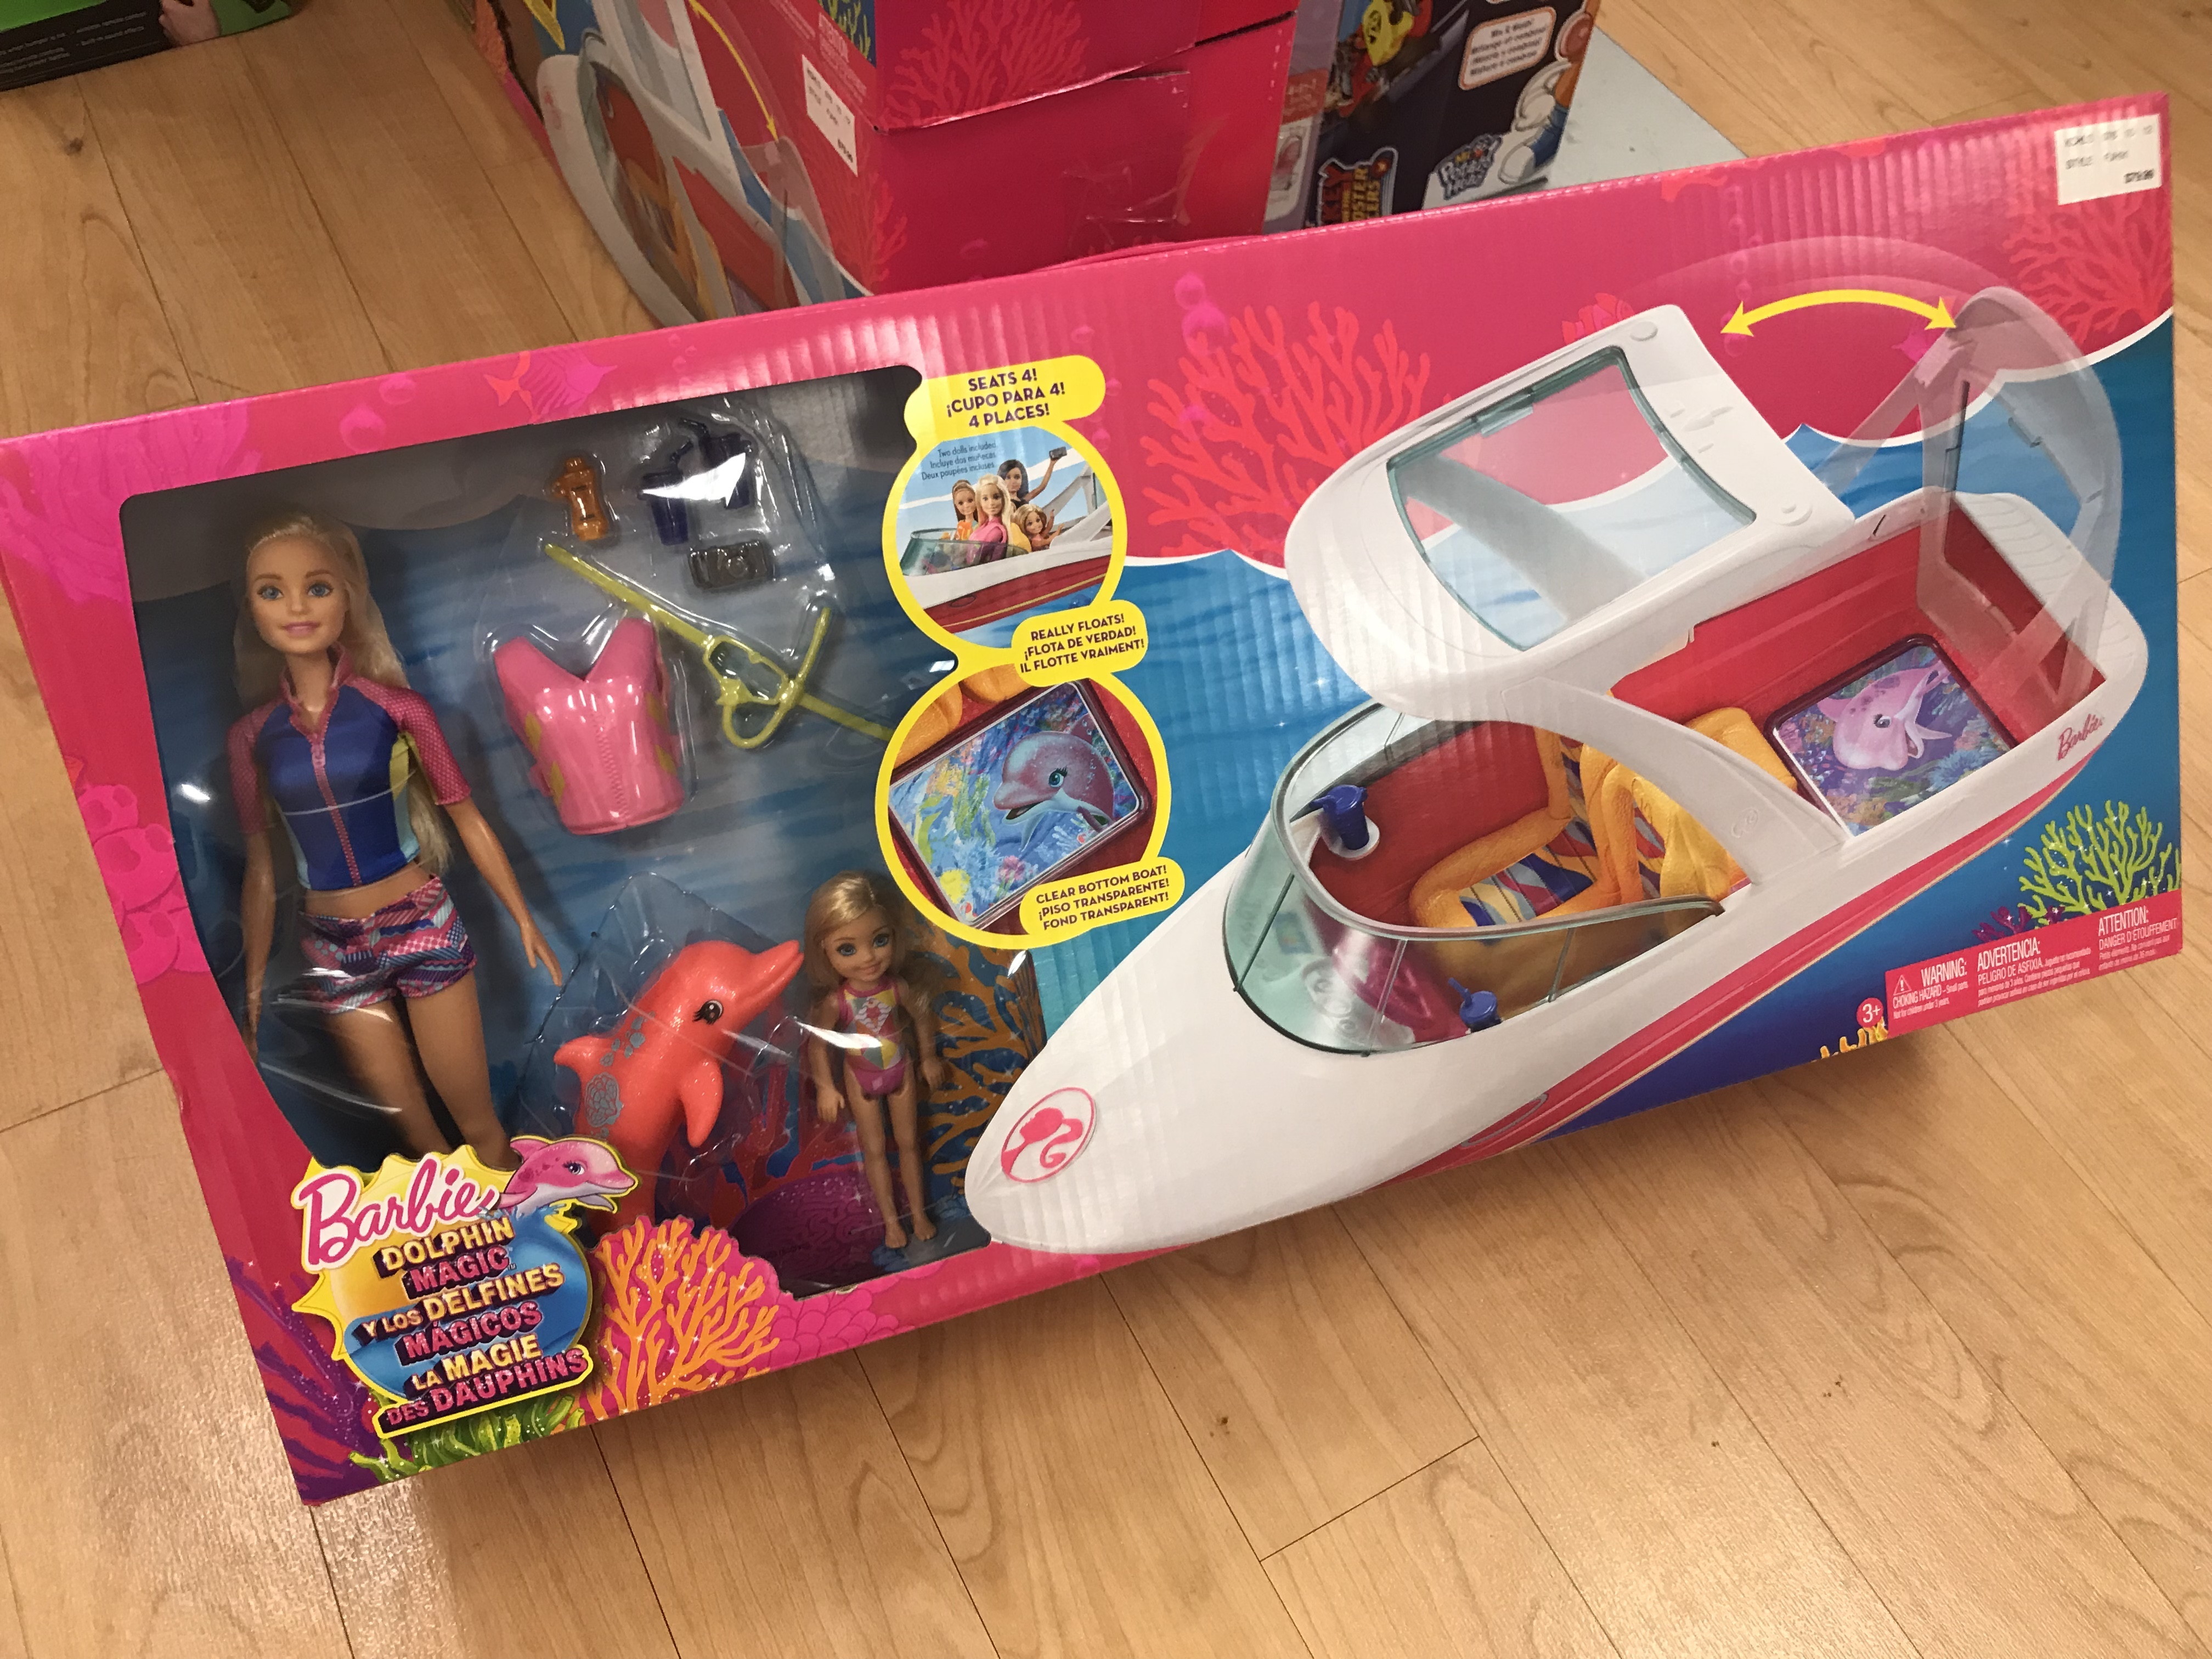 barbie magic dolphin boat